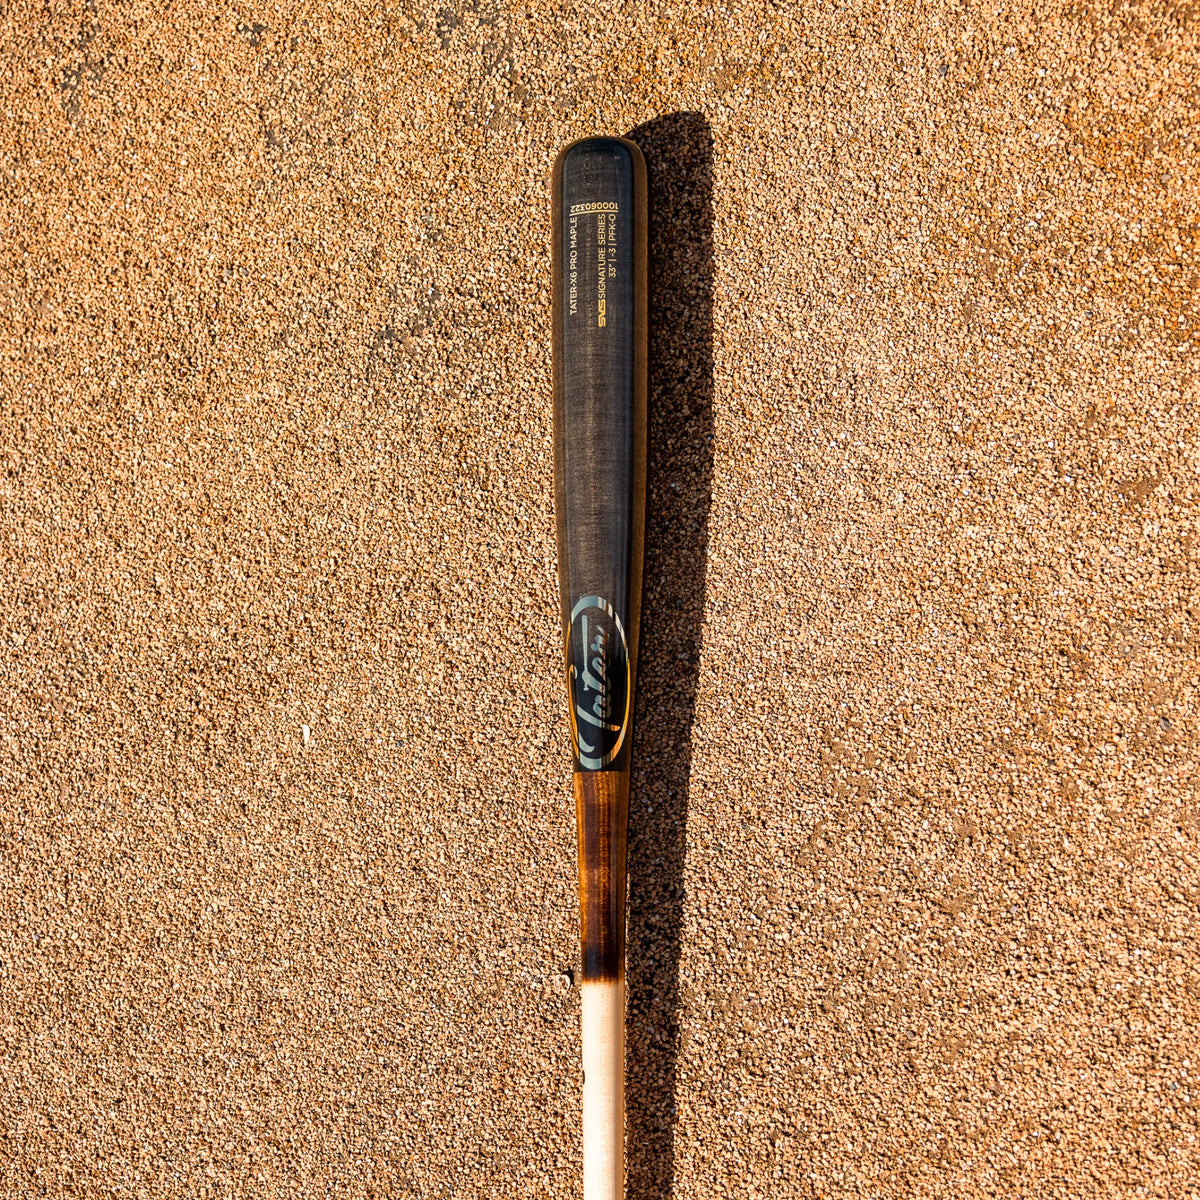 Tater Baseball high-quality custom maple wood bat lying on a sandy surface, showcasing the elegant black barrel and raw wood handle, ideal for travel baseball.